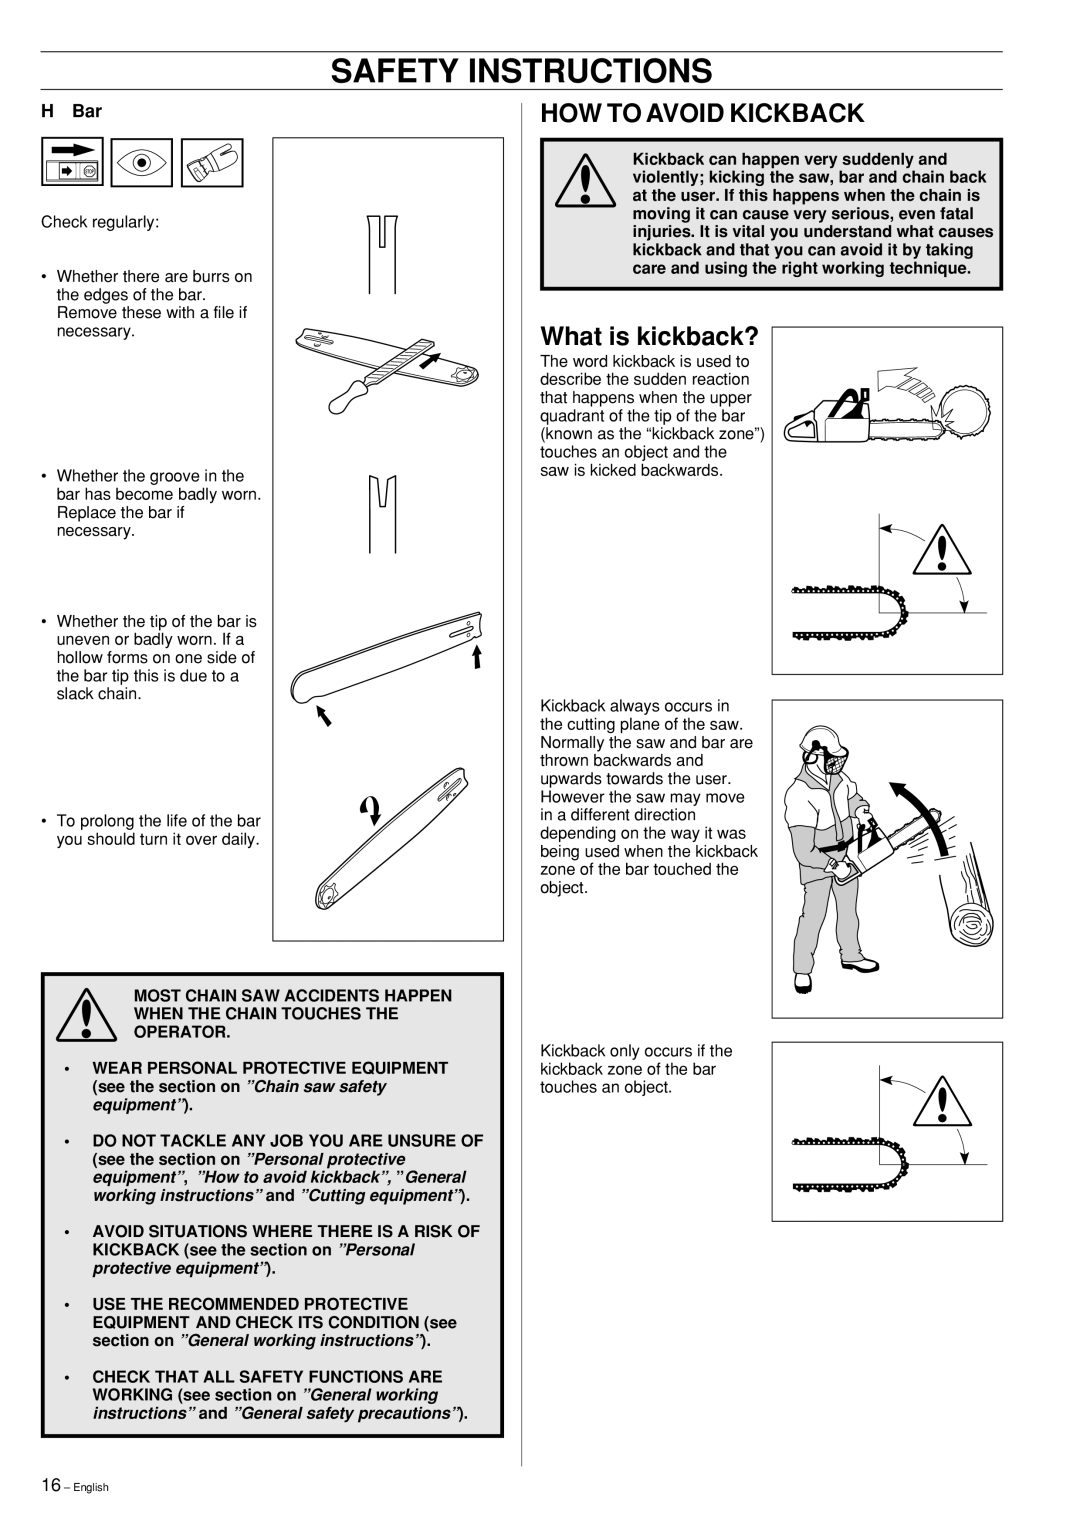 Husqvarna 55 Rancher manual Safety Instructions, How To Avoid Kickback, What is kickback?, H Bar 